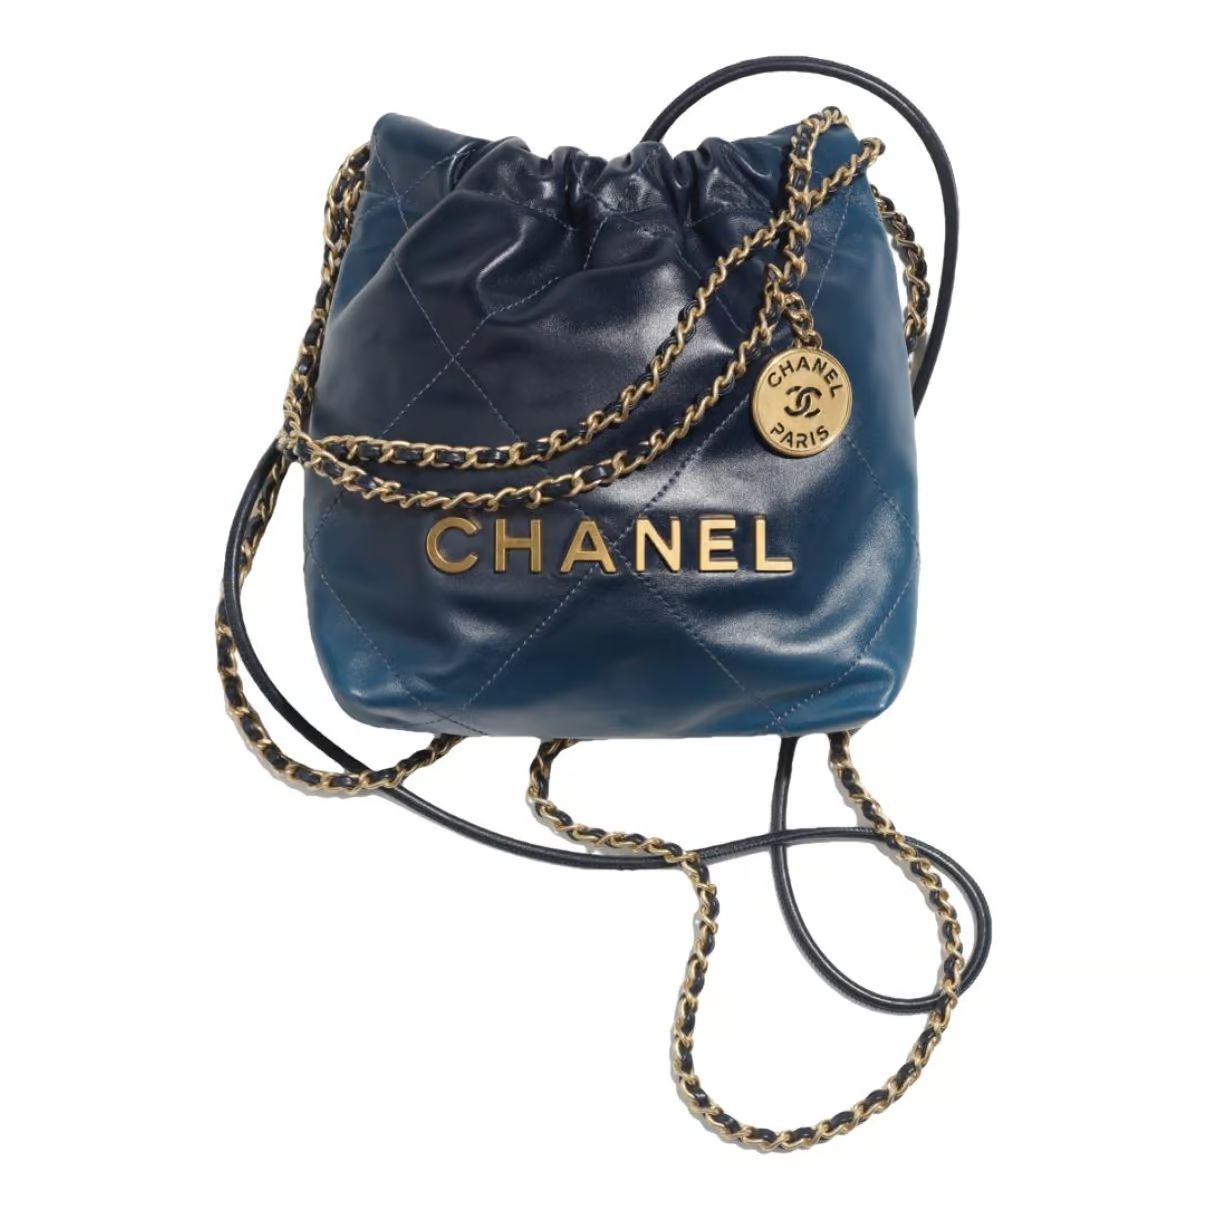 Chanel 22 Chanel Handbags for Women - Vestiaire Collective | Vestiaire Collective (Global)